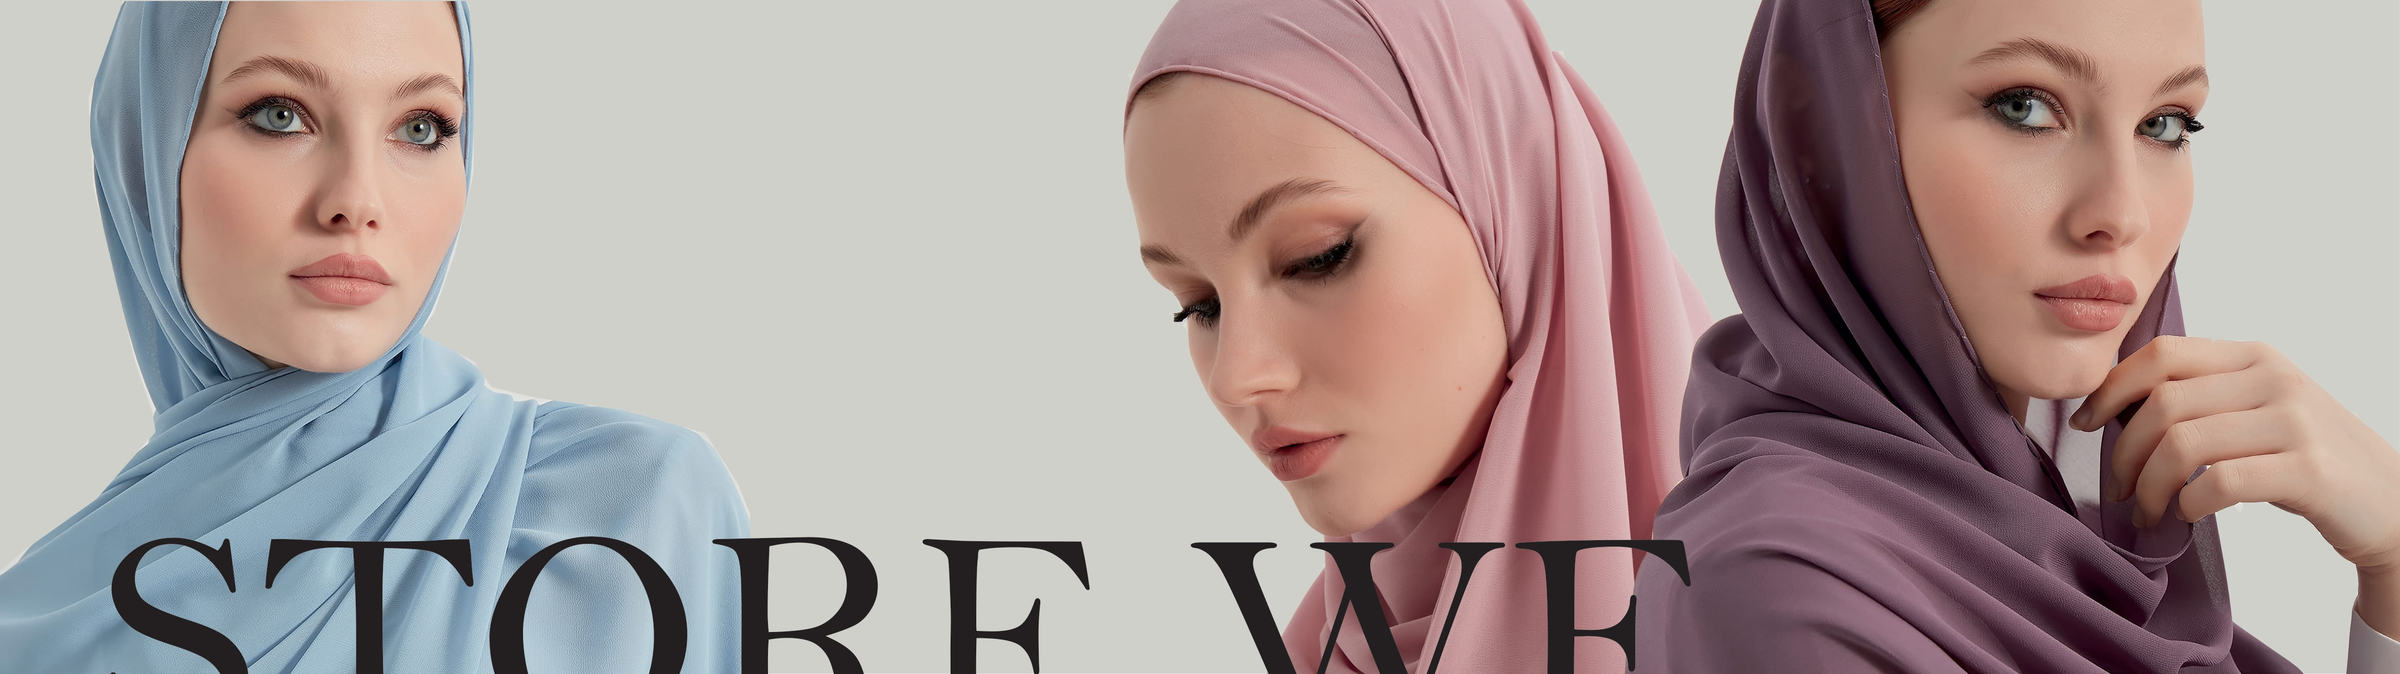 STOREWF-store wf-hijab-scarf-modest-fashion-london-www.storewf.com